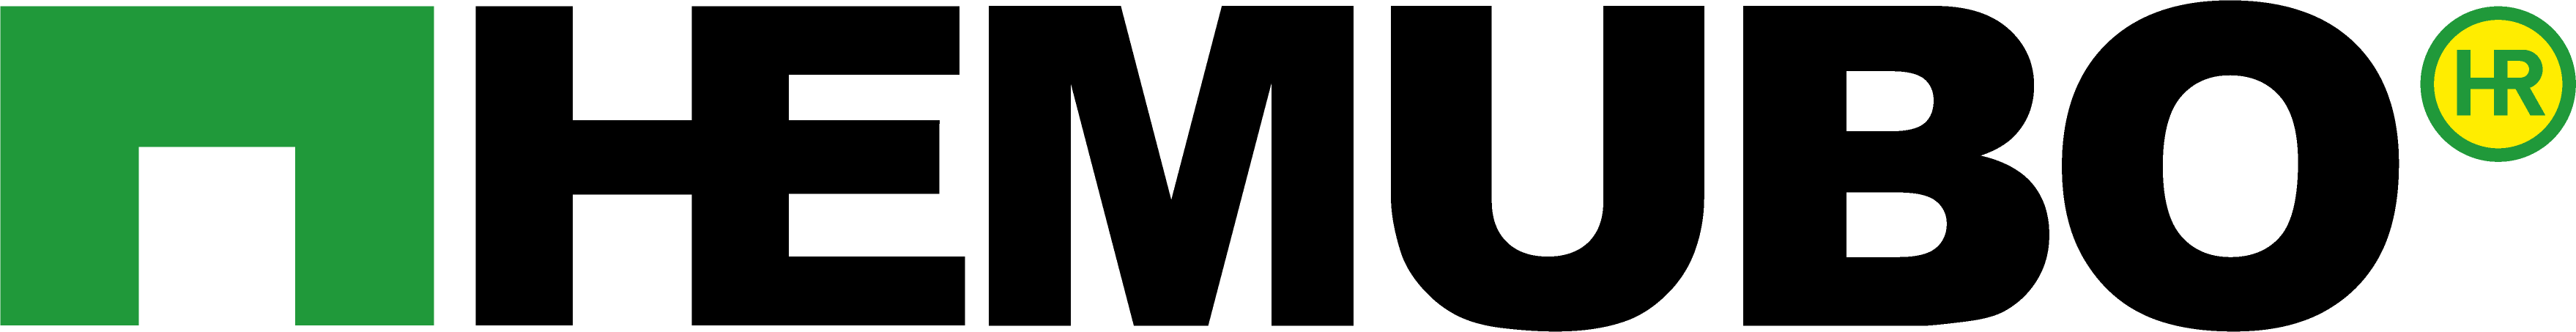 hemubo logo